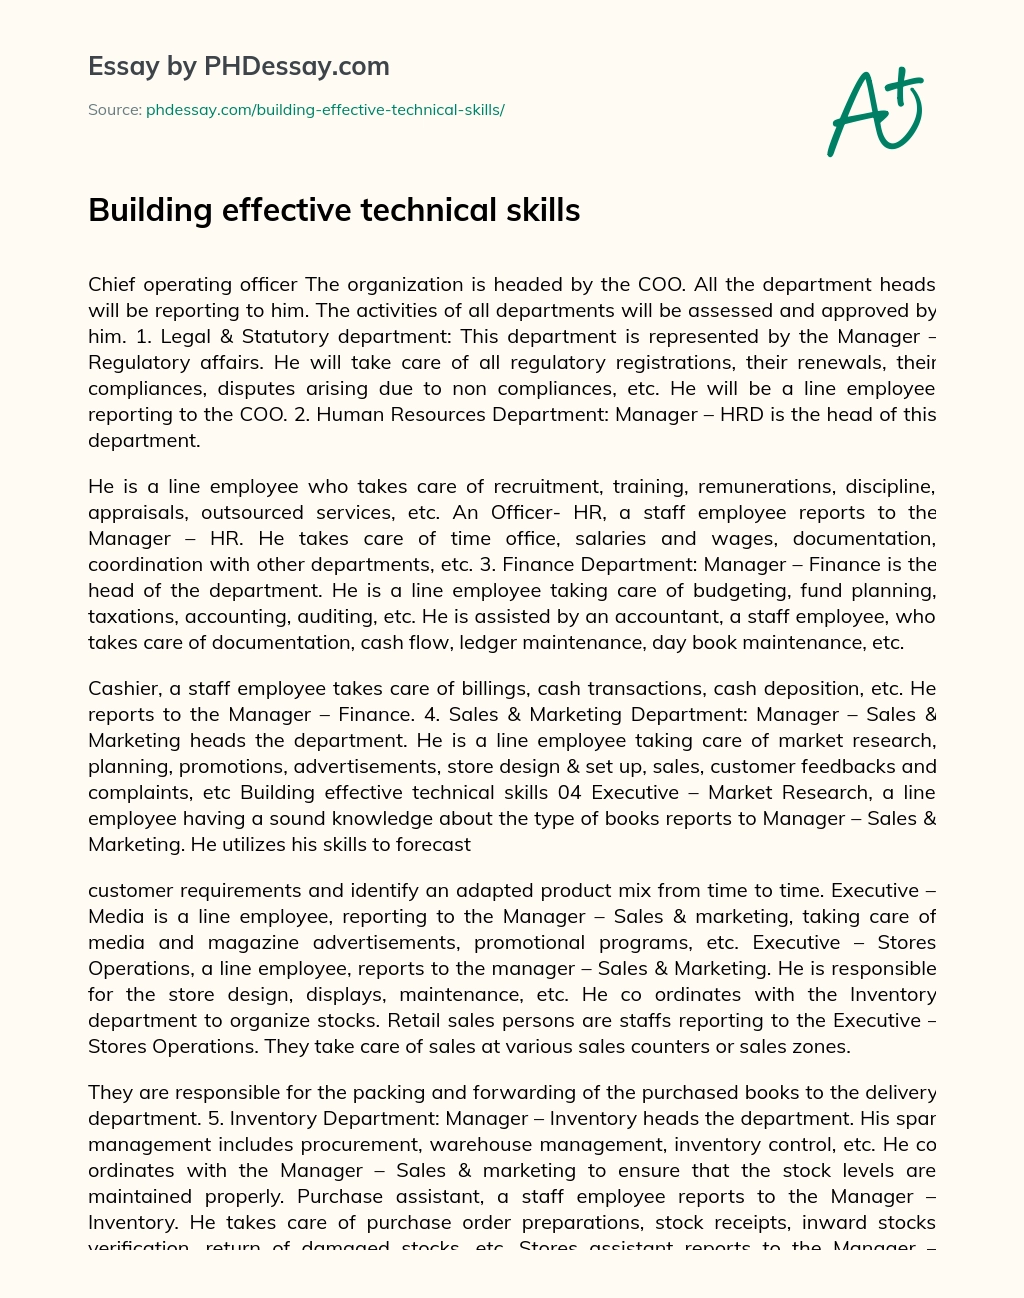 Building effective technical skills essay